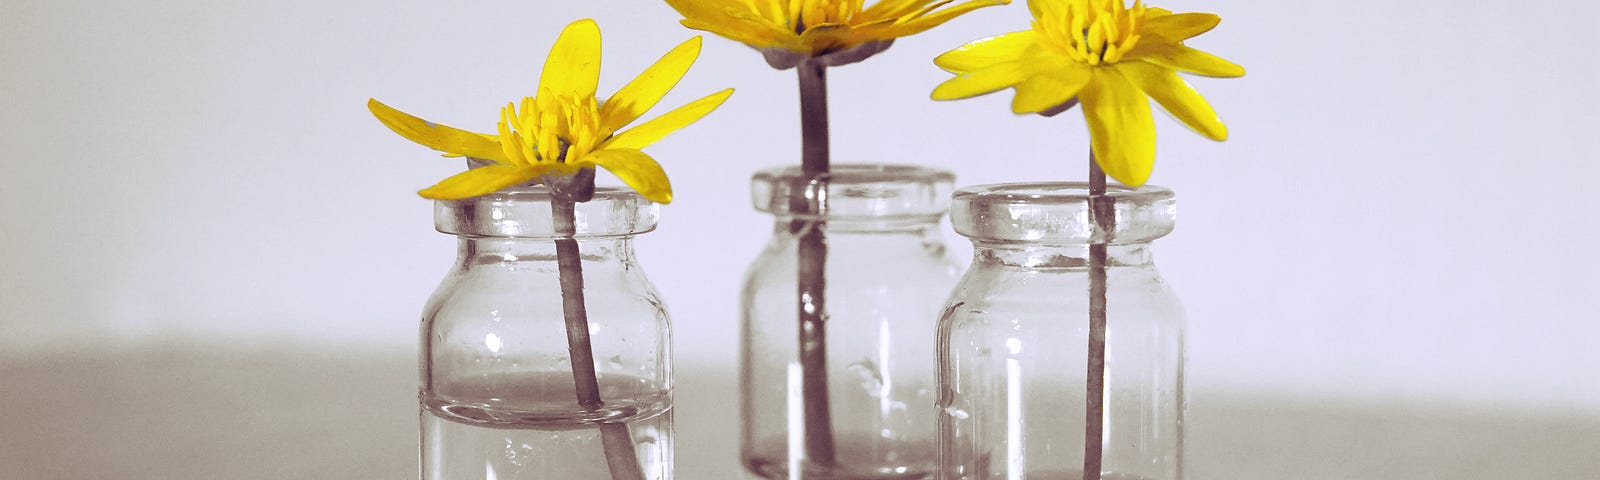 three yellow flowers in vases